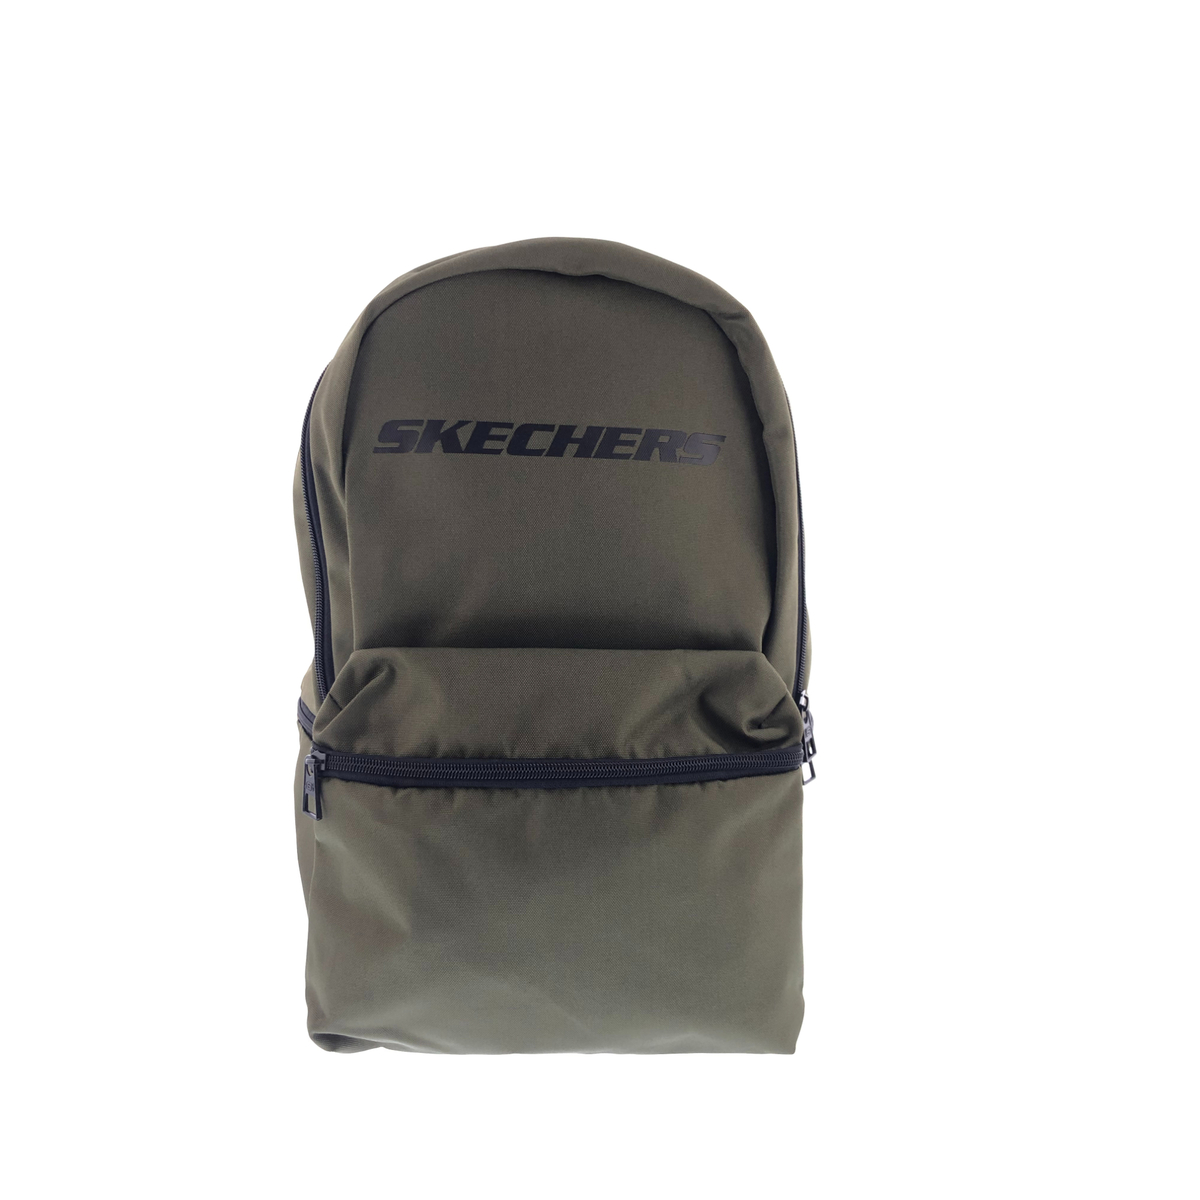 Skechers Backpack S844-18